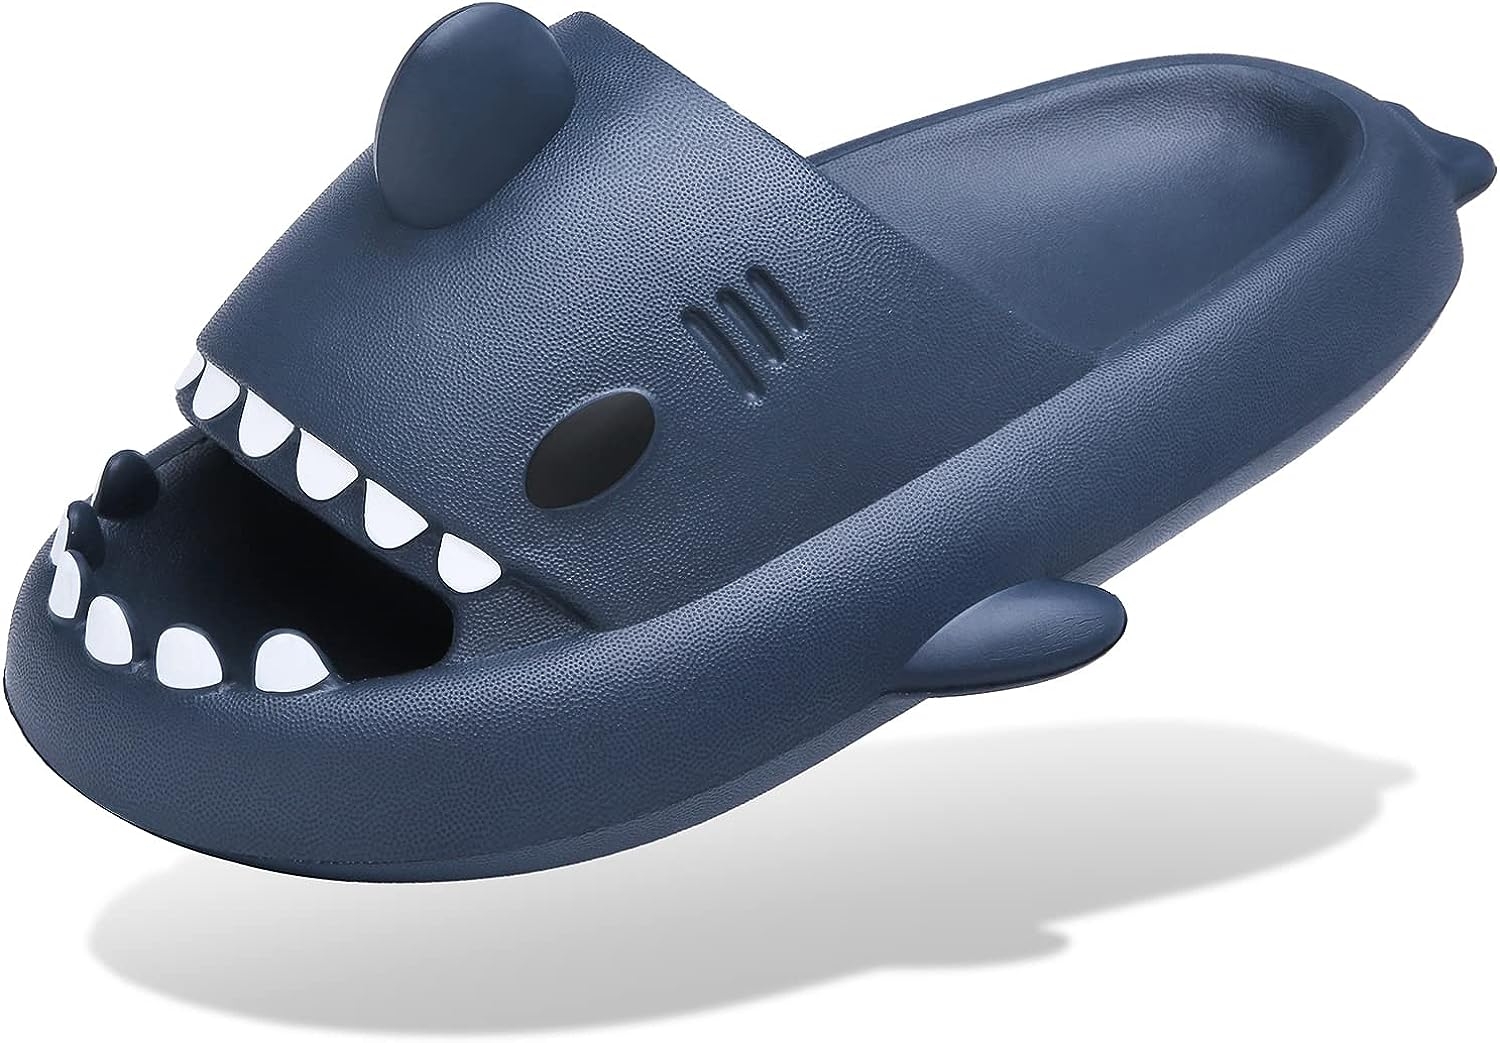 Men’s and Women’s Shark Slides Cloud Slippers Summer Novelty Open Toe Slide Sandals Anti-Slip Beach Pool Shower Shoes with